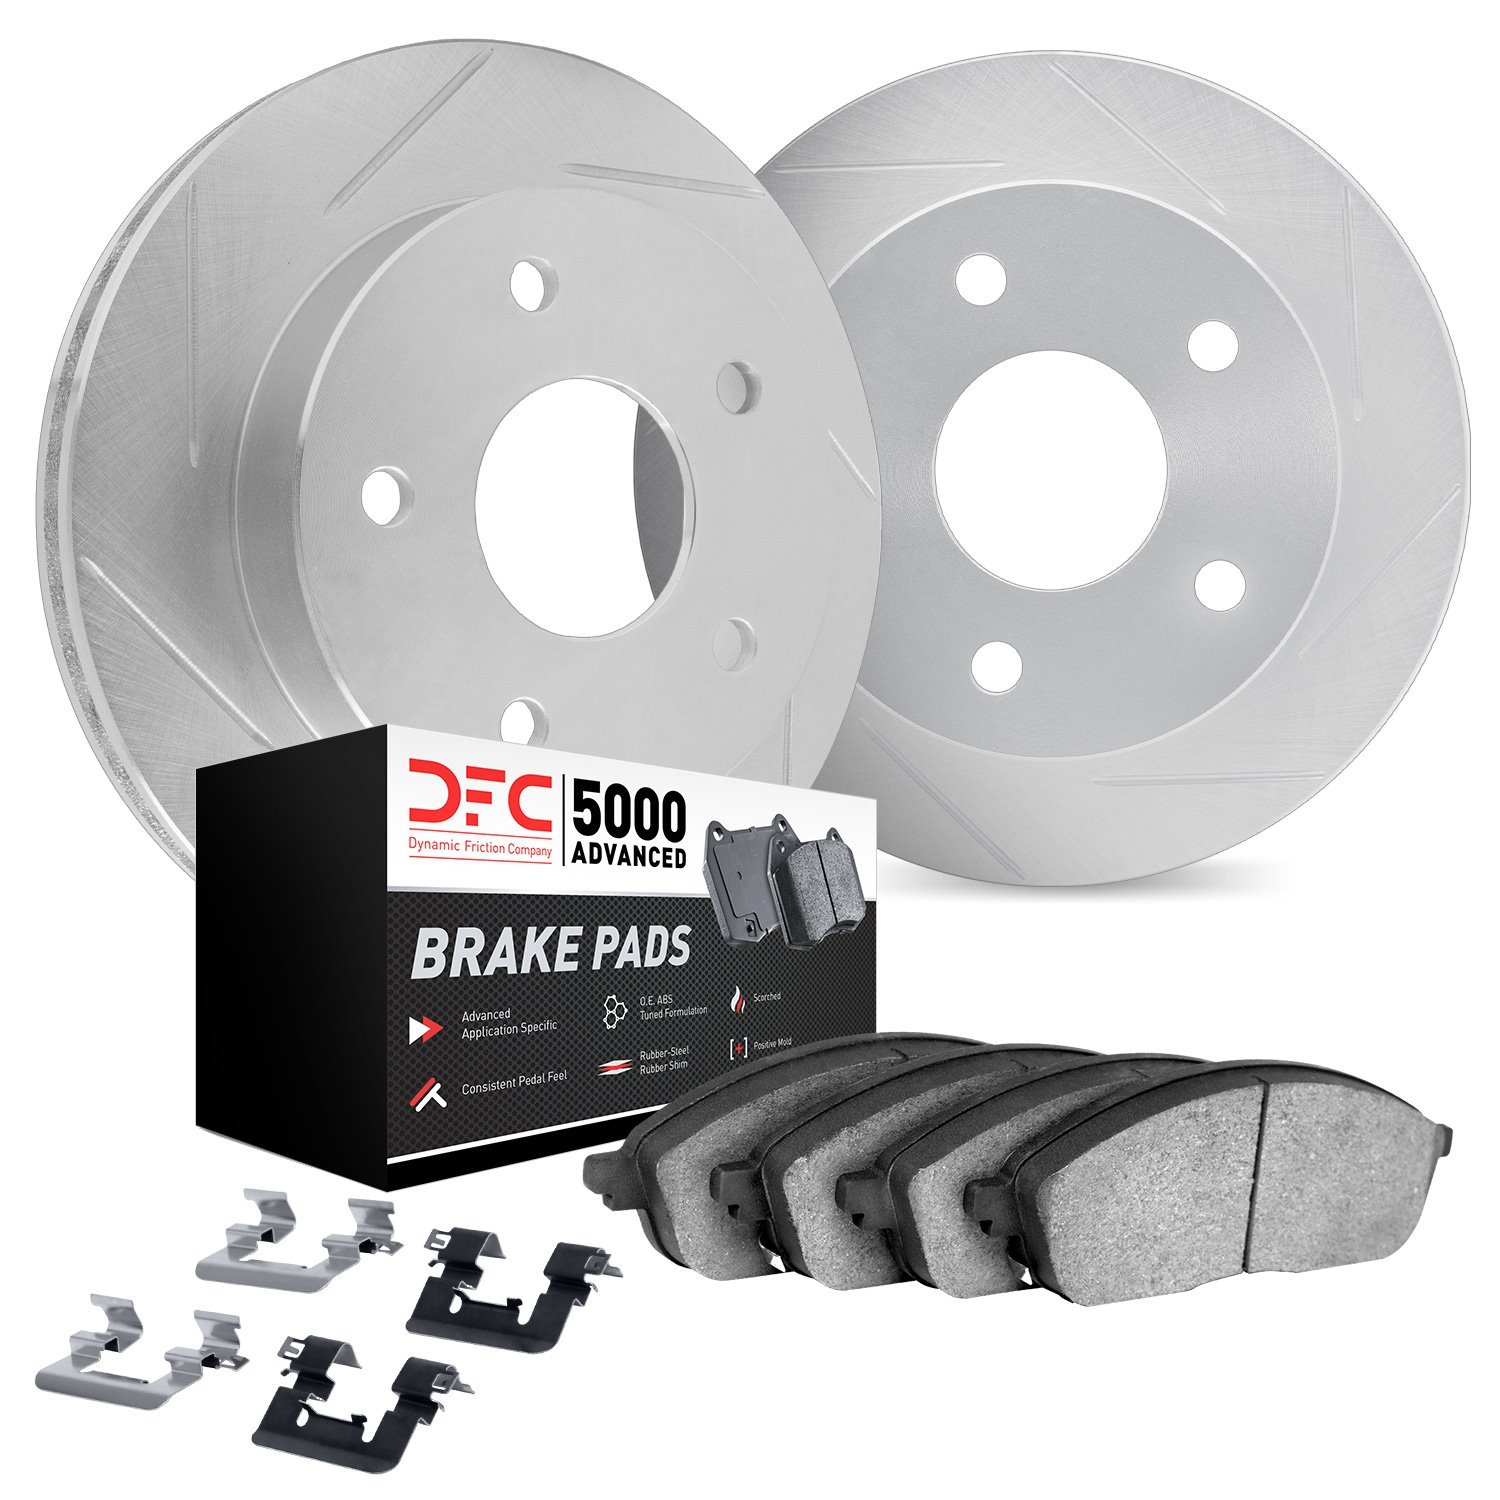 5512-80073 Slotted Brake Rotors w/5000 Advanced Brake Pads Kit & Hardware [Silver], 2013-2015 Ford/Lincoln/Mercury/Mazda, Positi